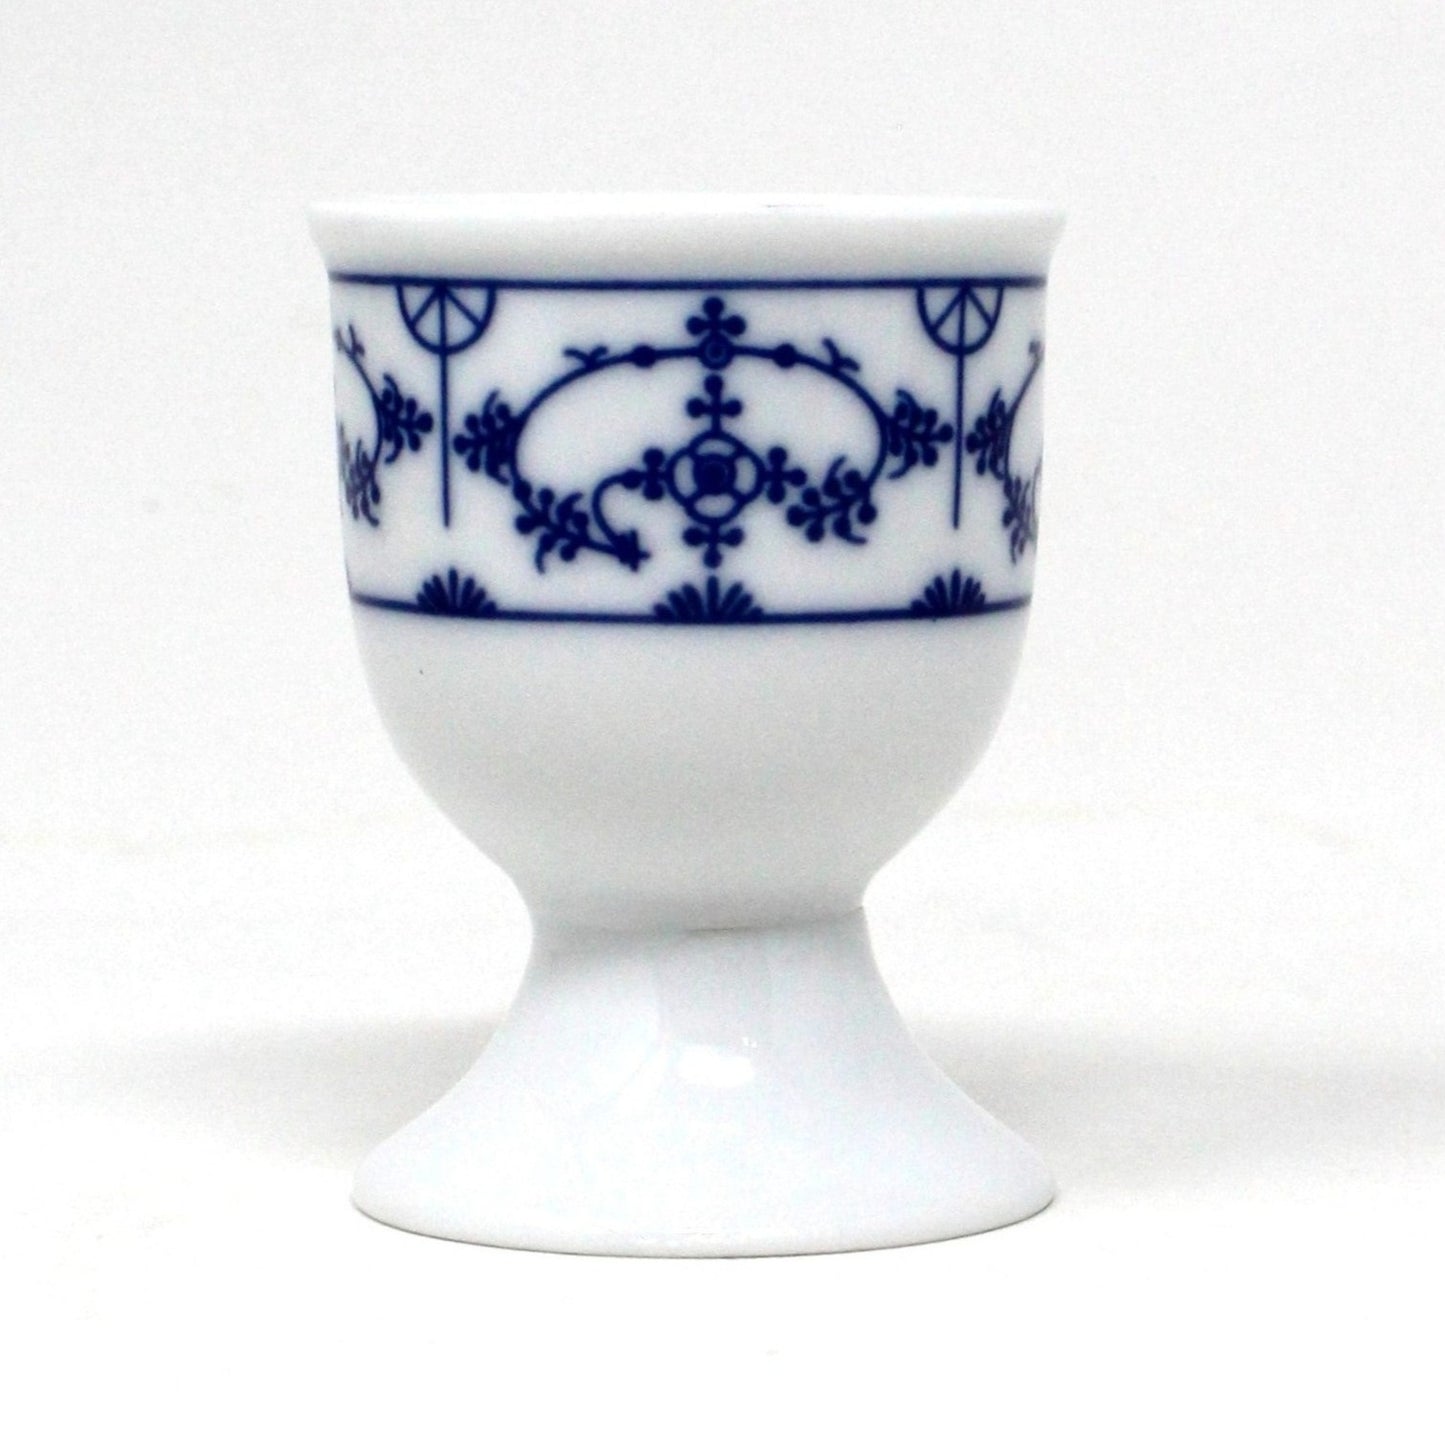 Egg Cups, Winterling Schwarzenbach, Strawflower, Blue & White, Bavaria, Set of 3, Vintage, SOLD